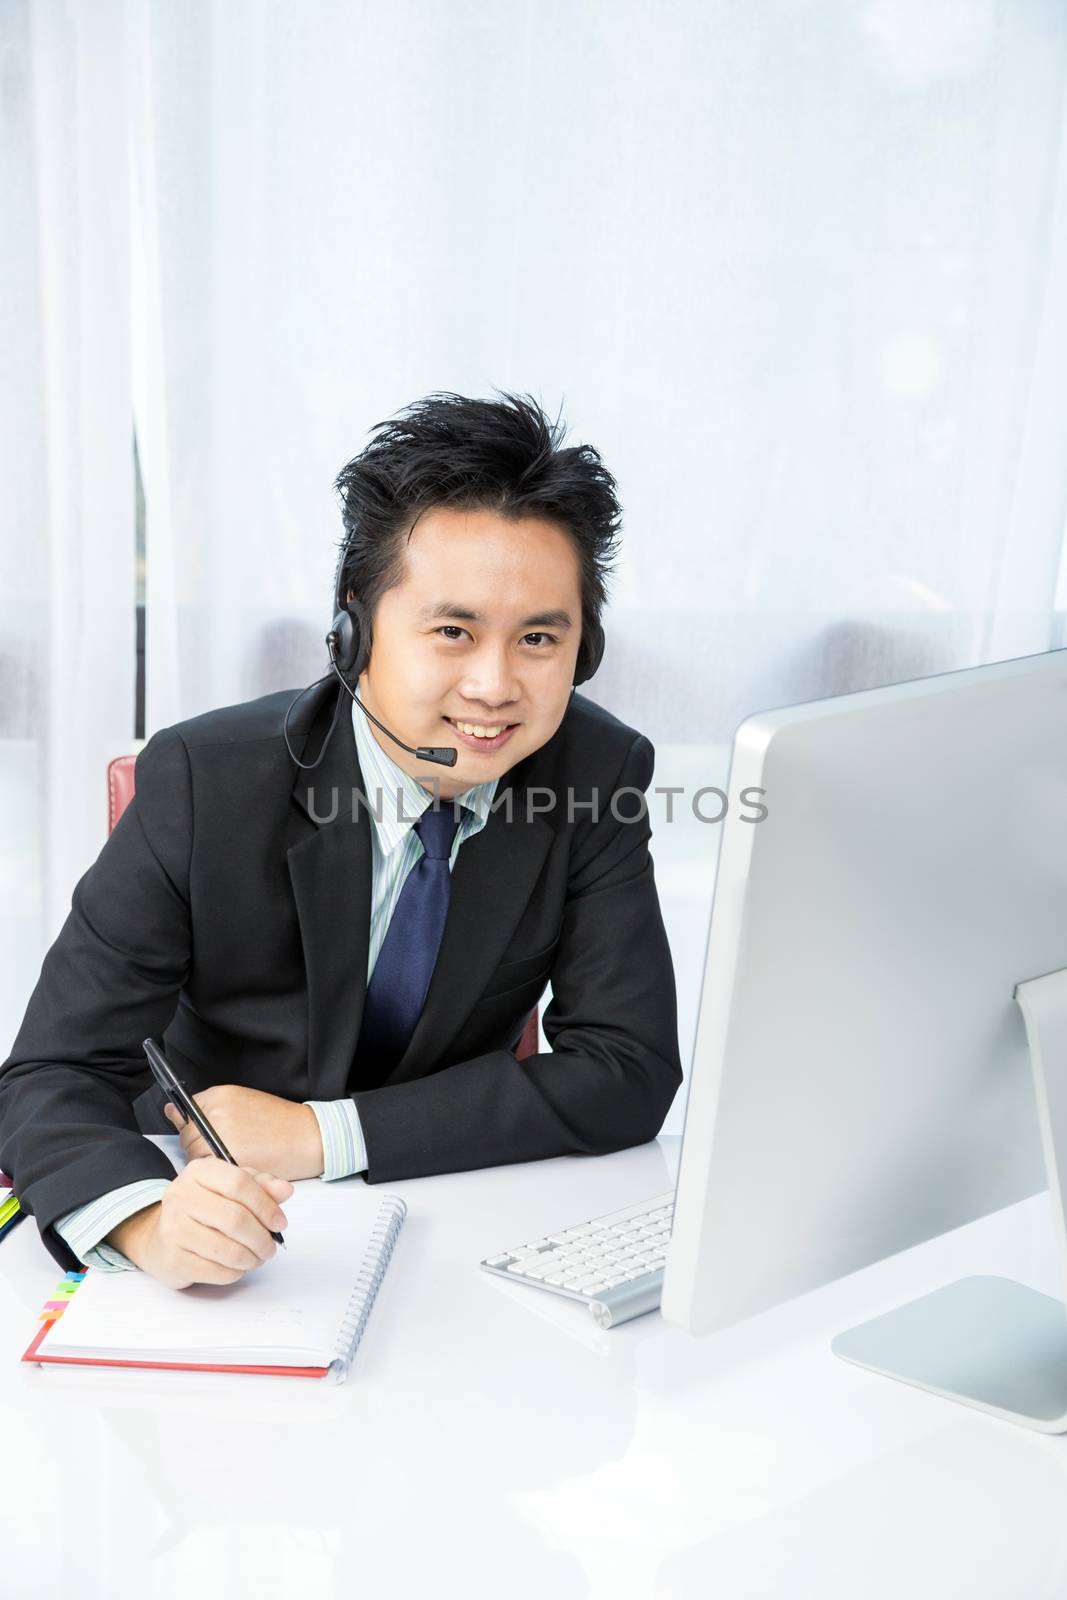 businessman making tele conference with desktop computer